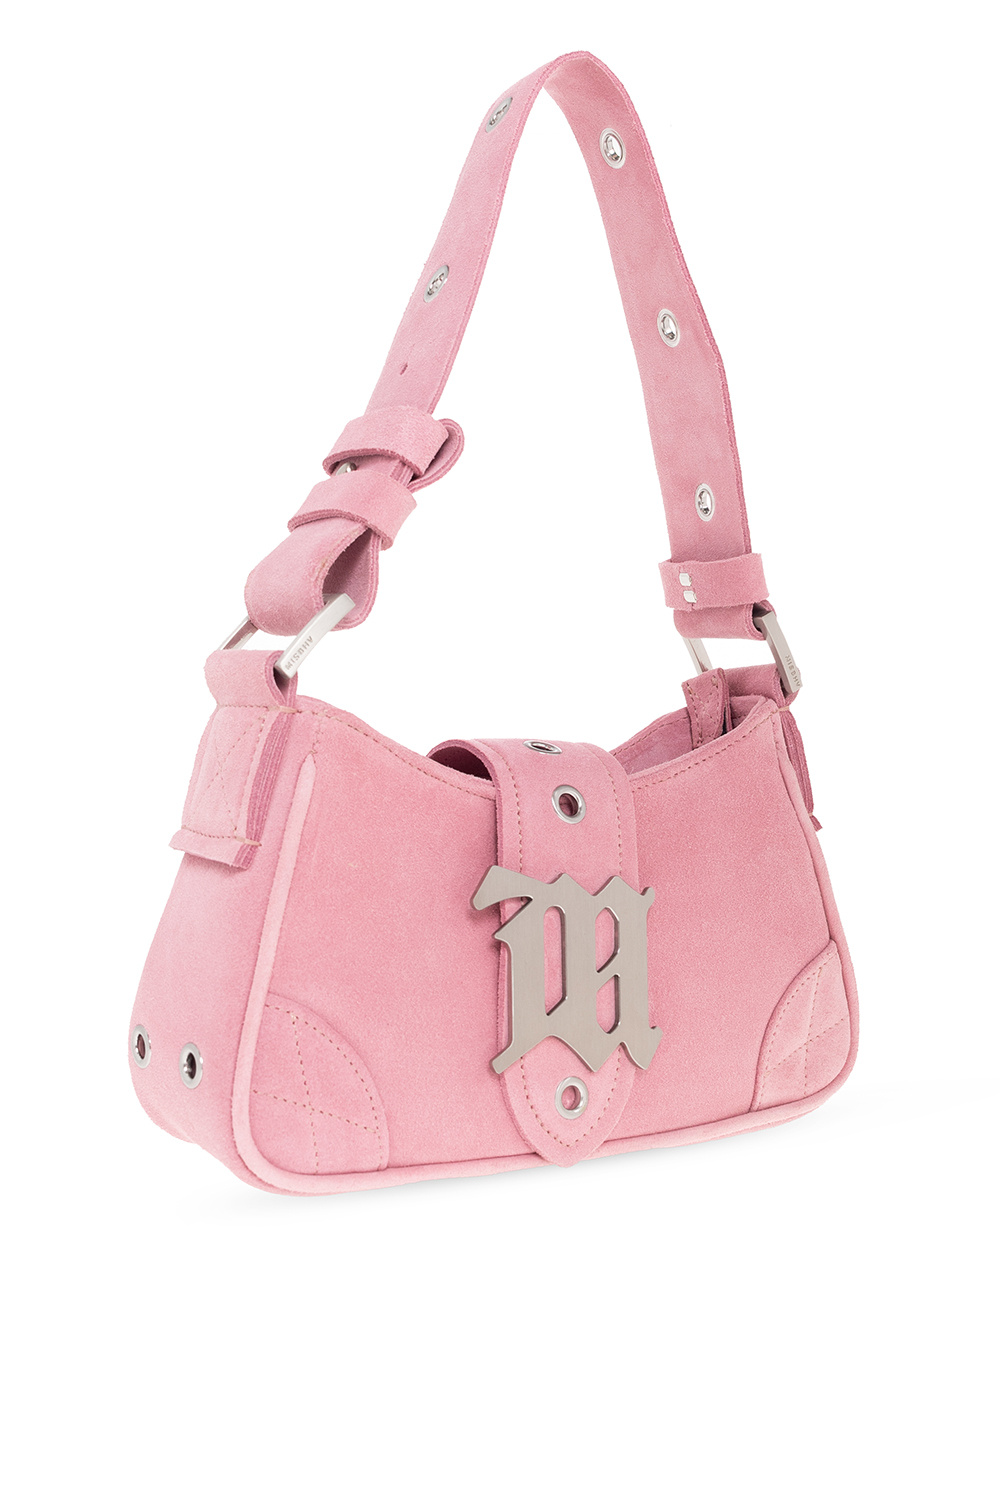 Discover Your Favorite Pink Hermès Bag